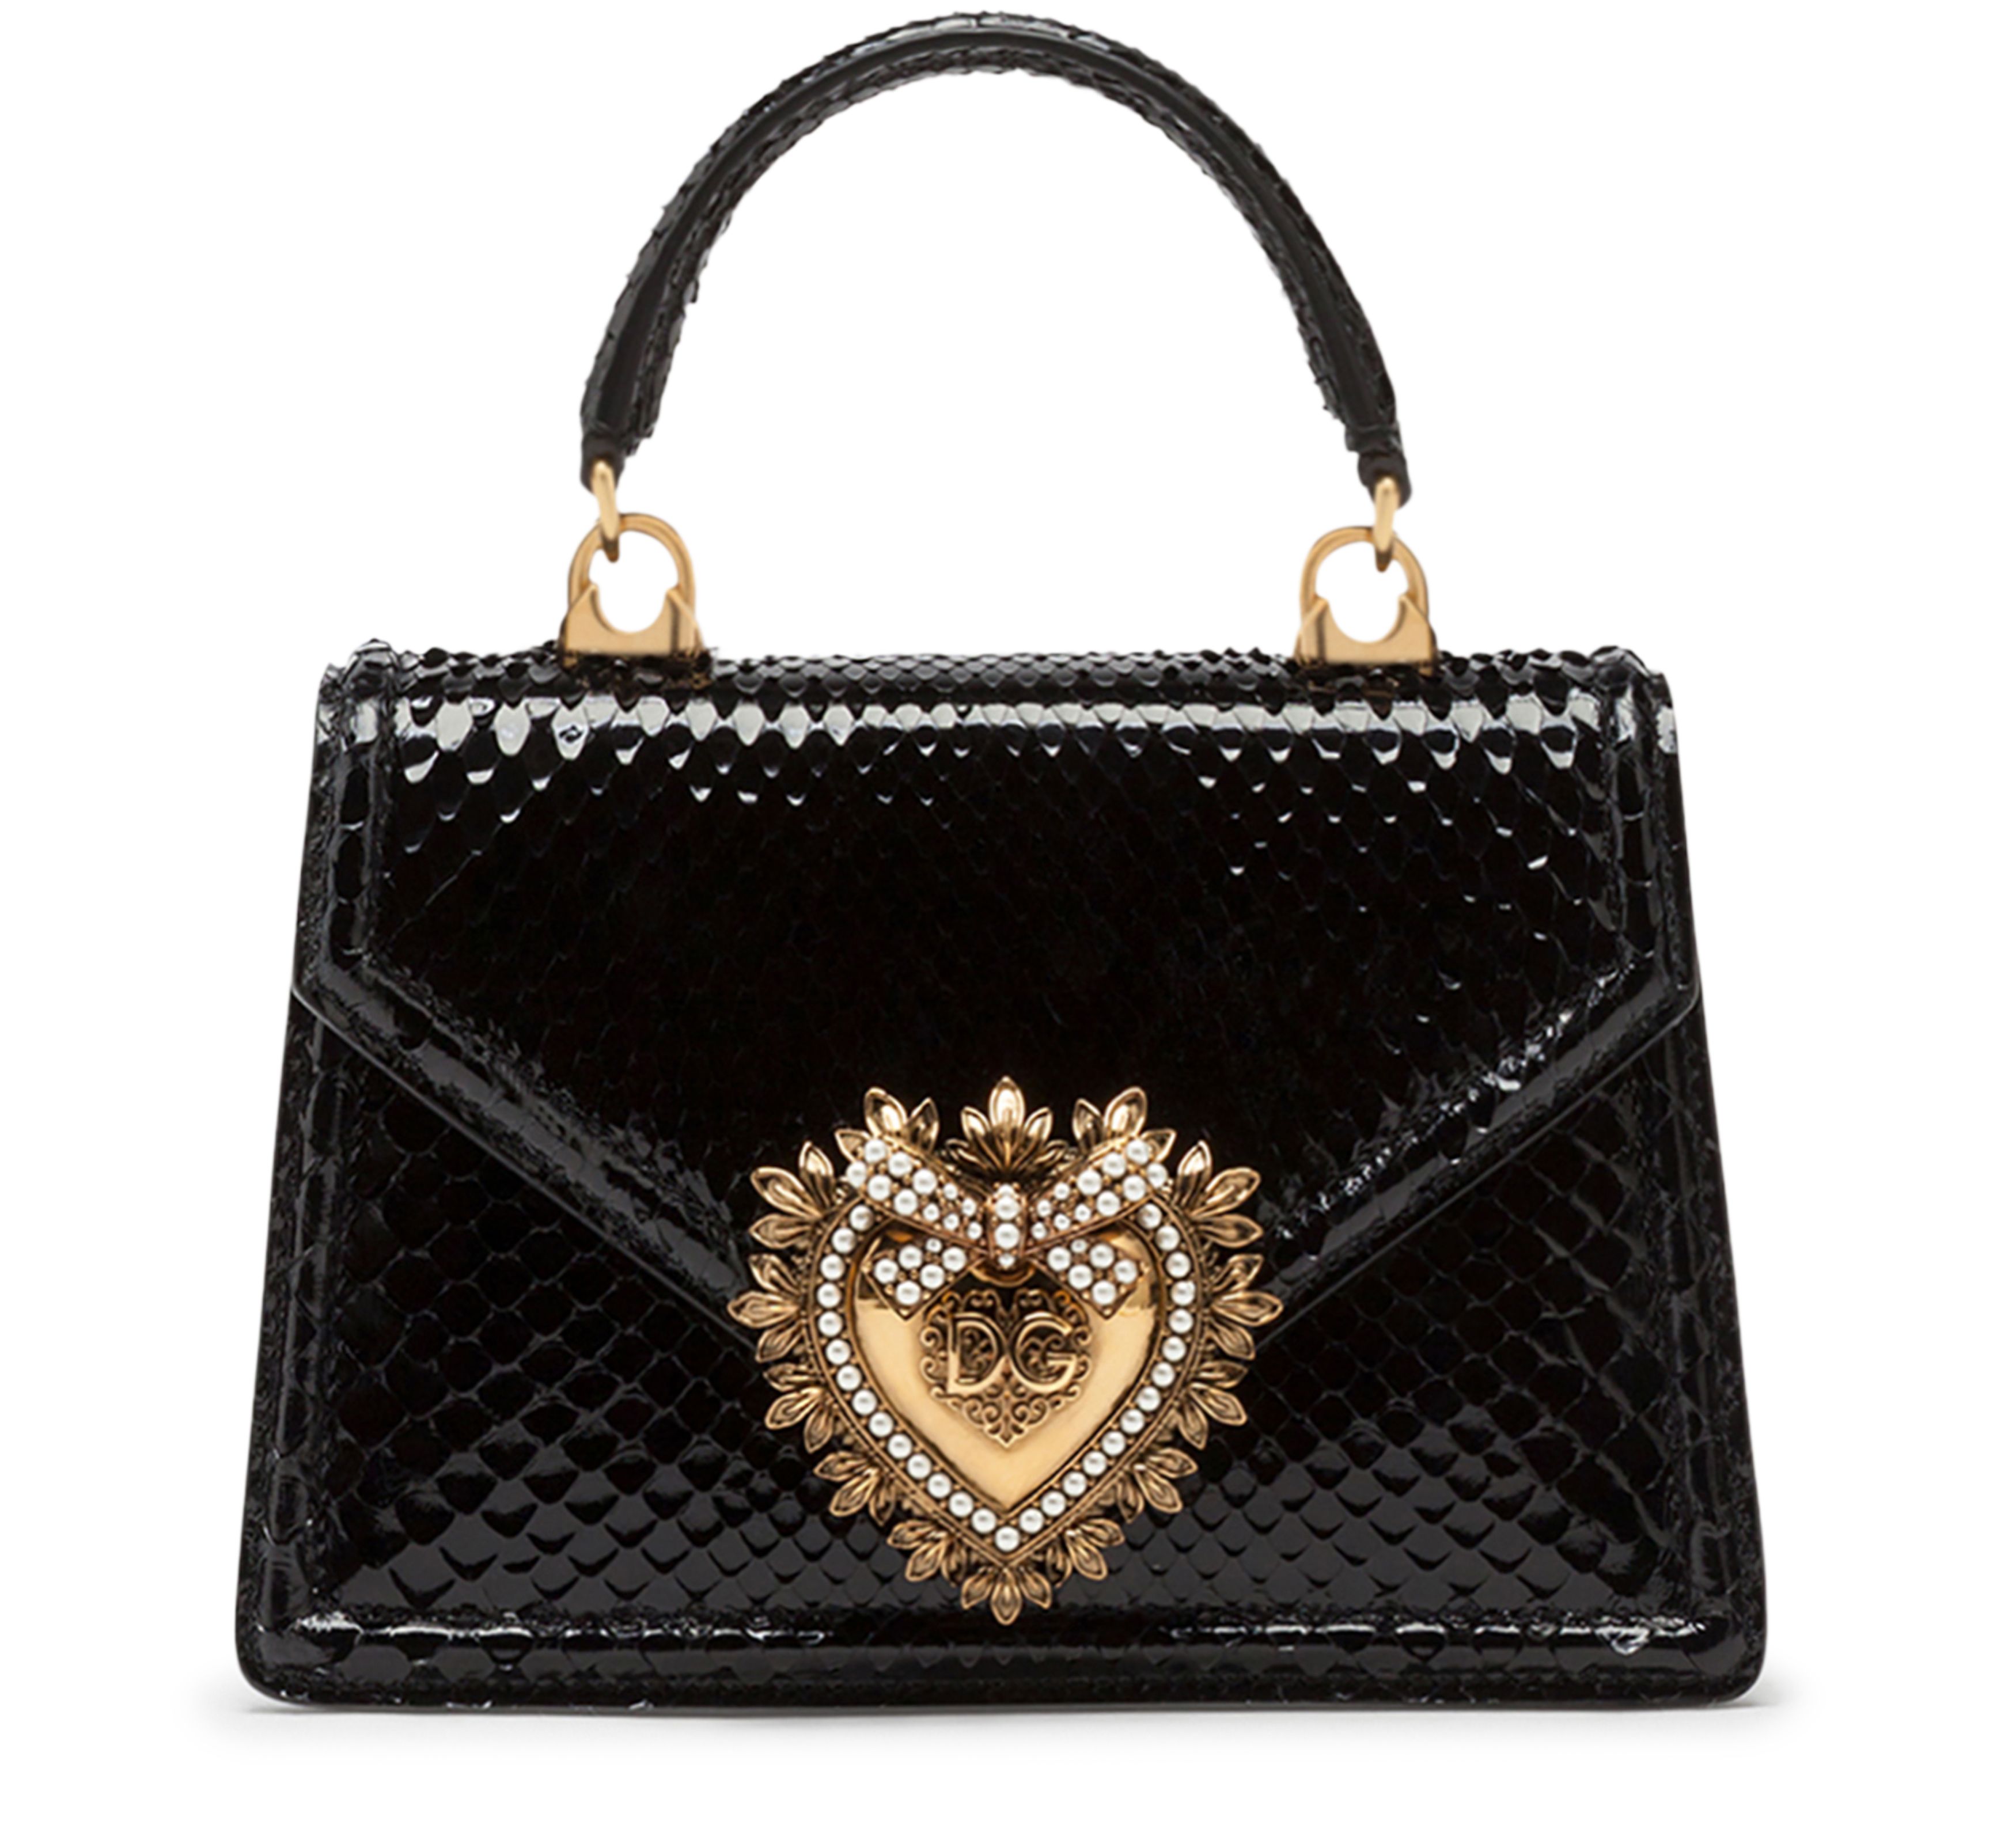 Dolce & Gabbana Small Devotion bag in python-print